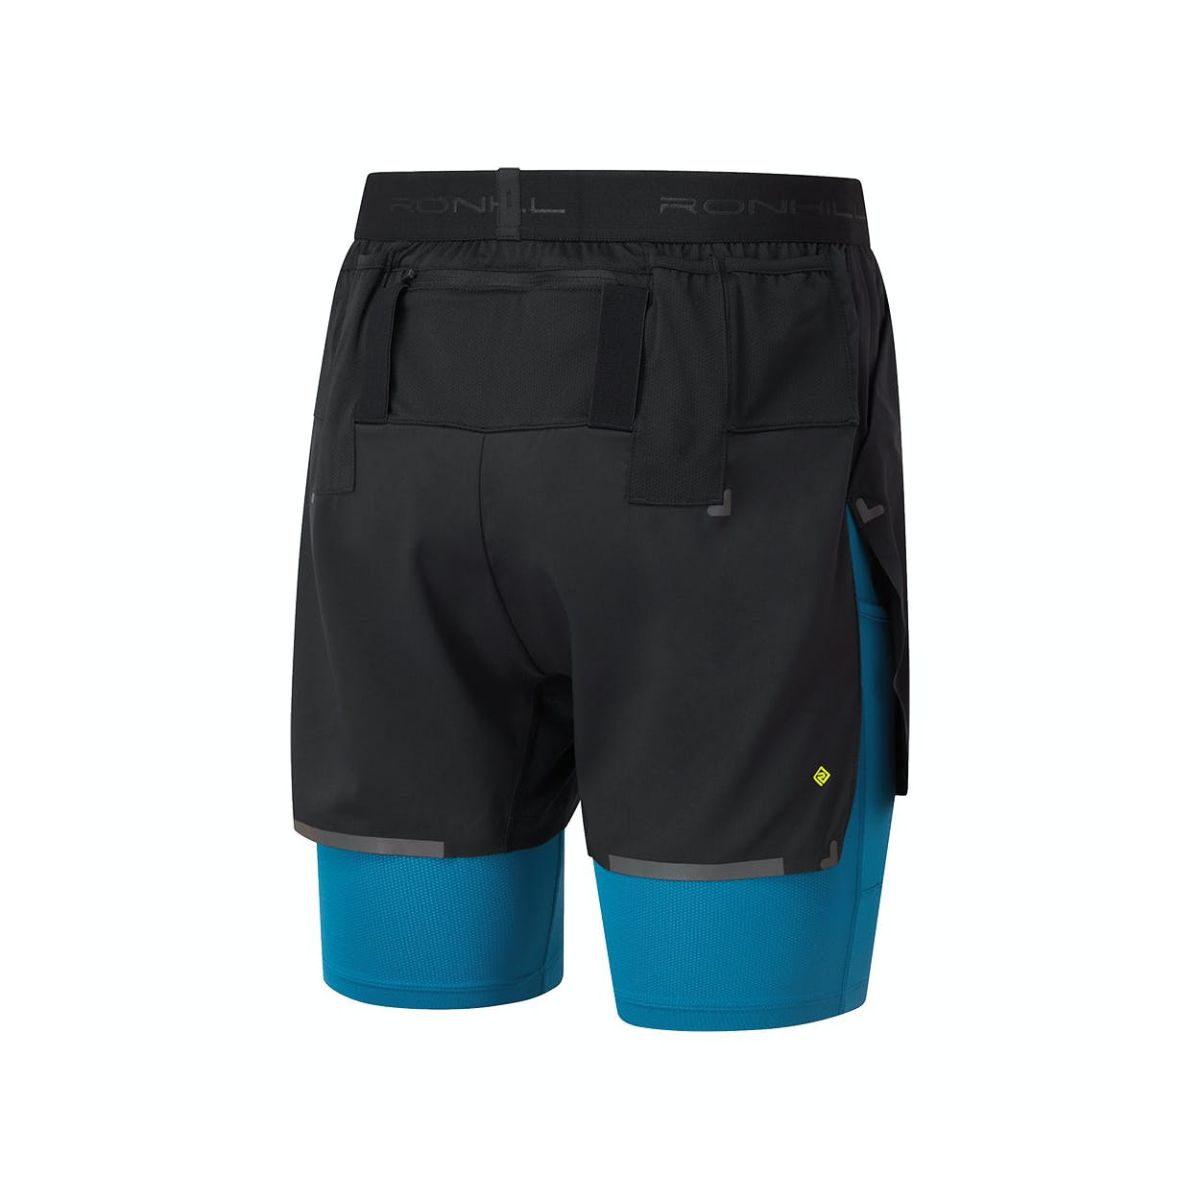 ron-hill-tech-twin-shorts-blackprussian-blue